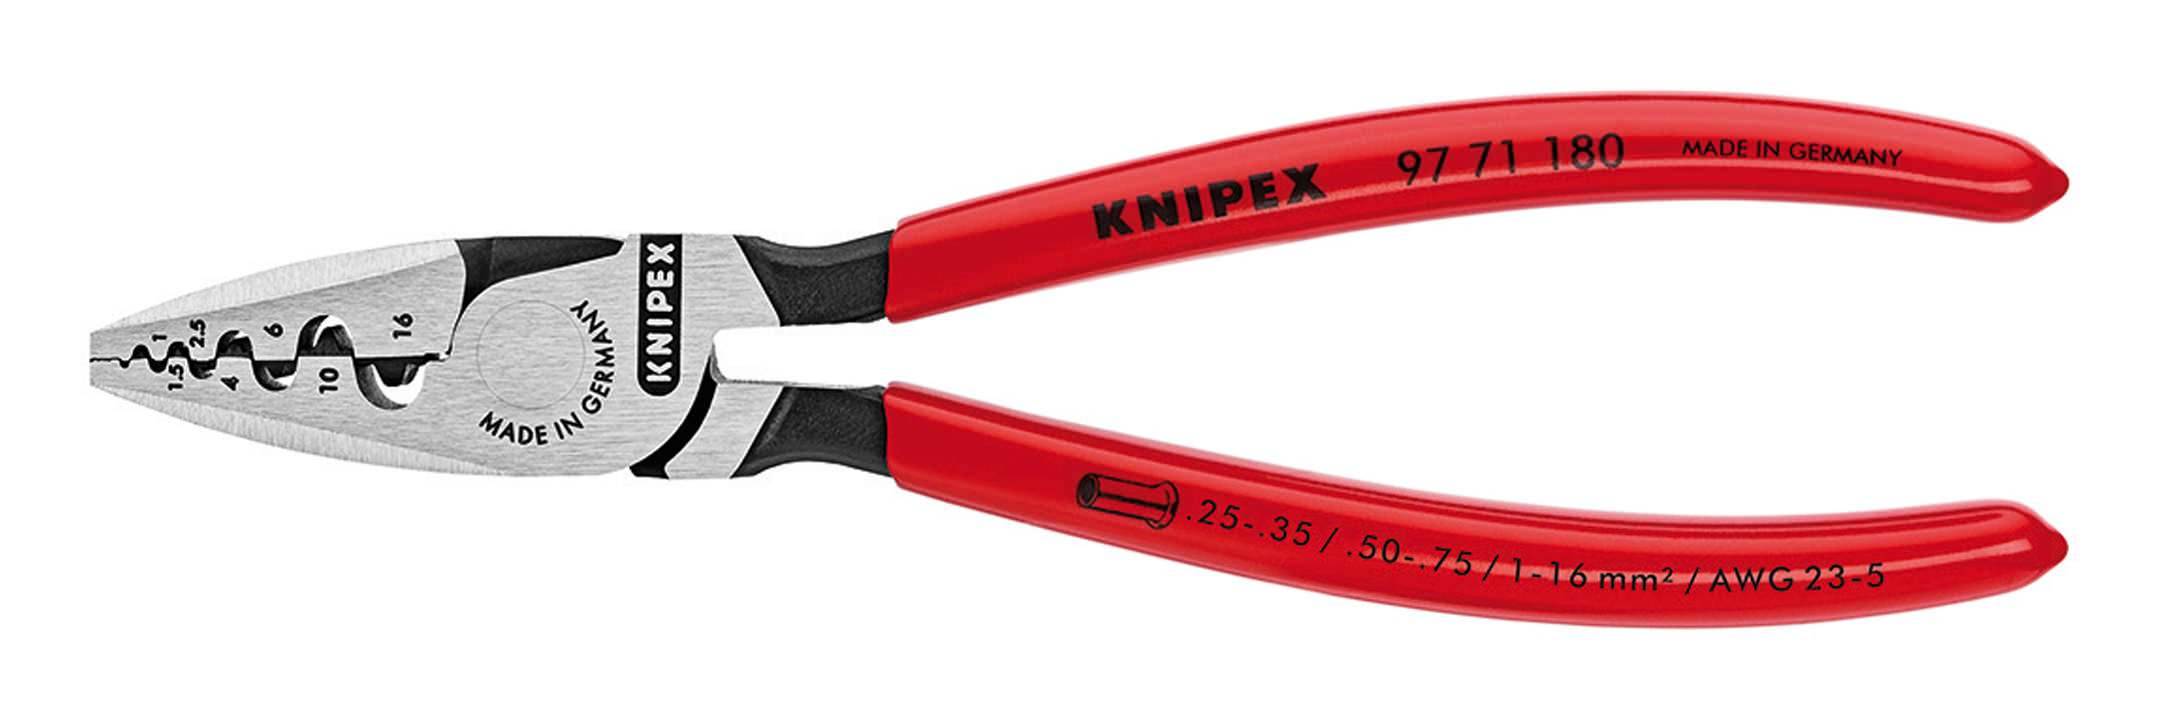 Knipex | 97 71 poliert Aderendhülsenzange 180mm 180